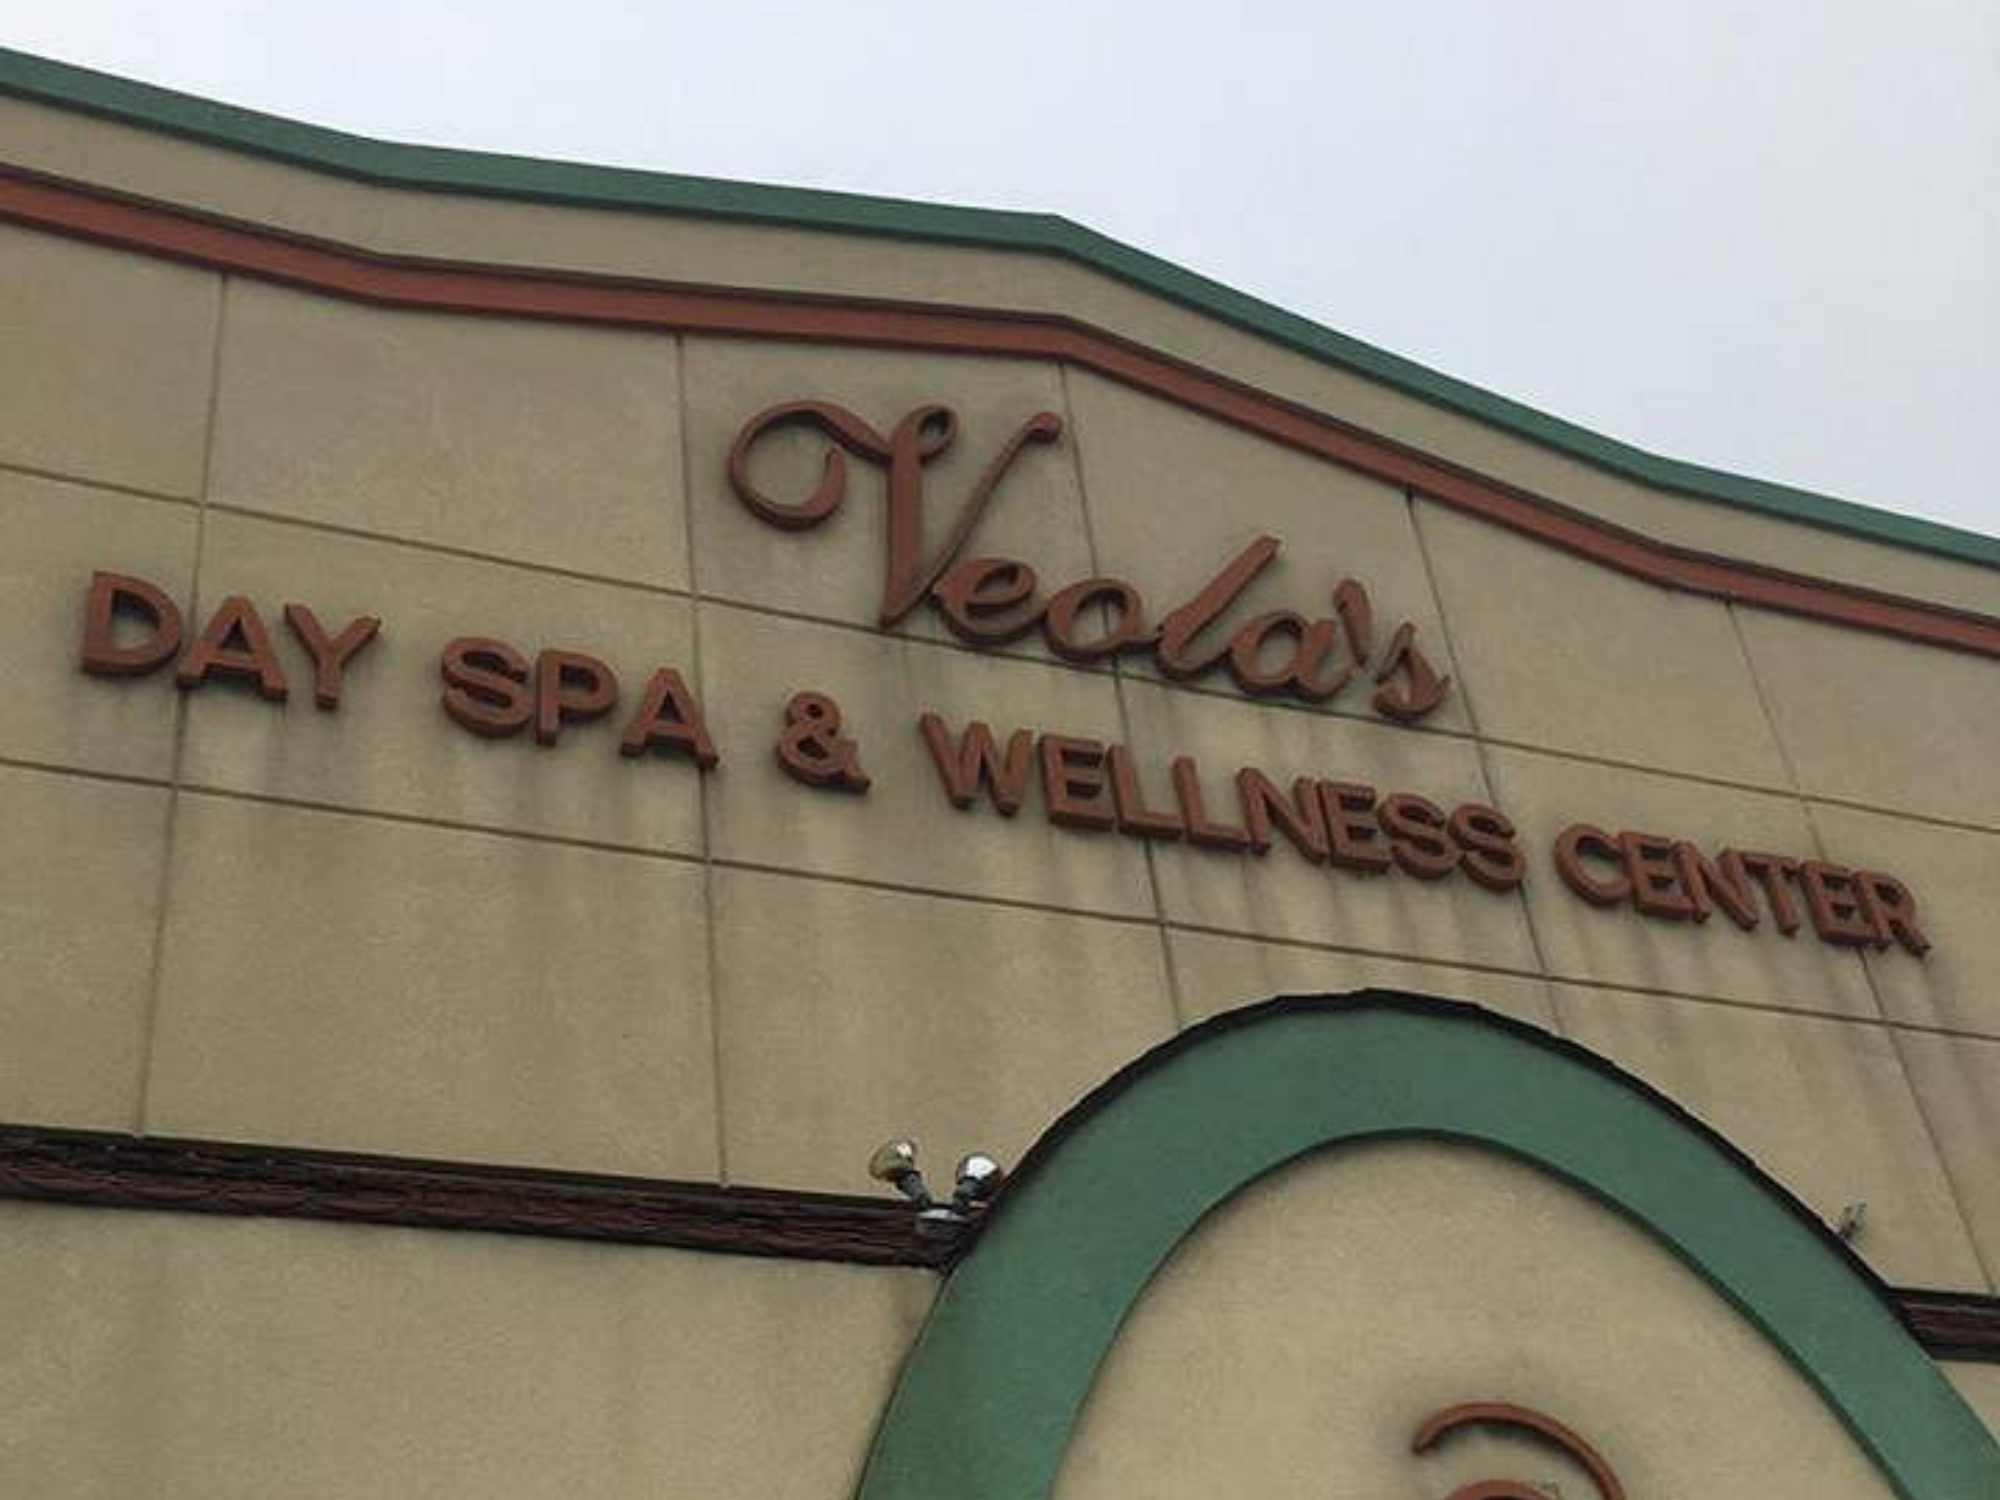 Veola's Day Spa & Wellness Center